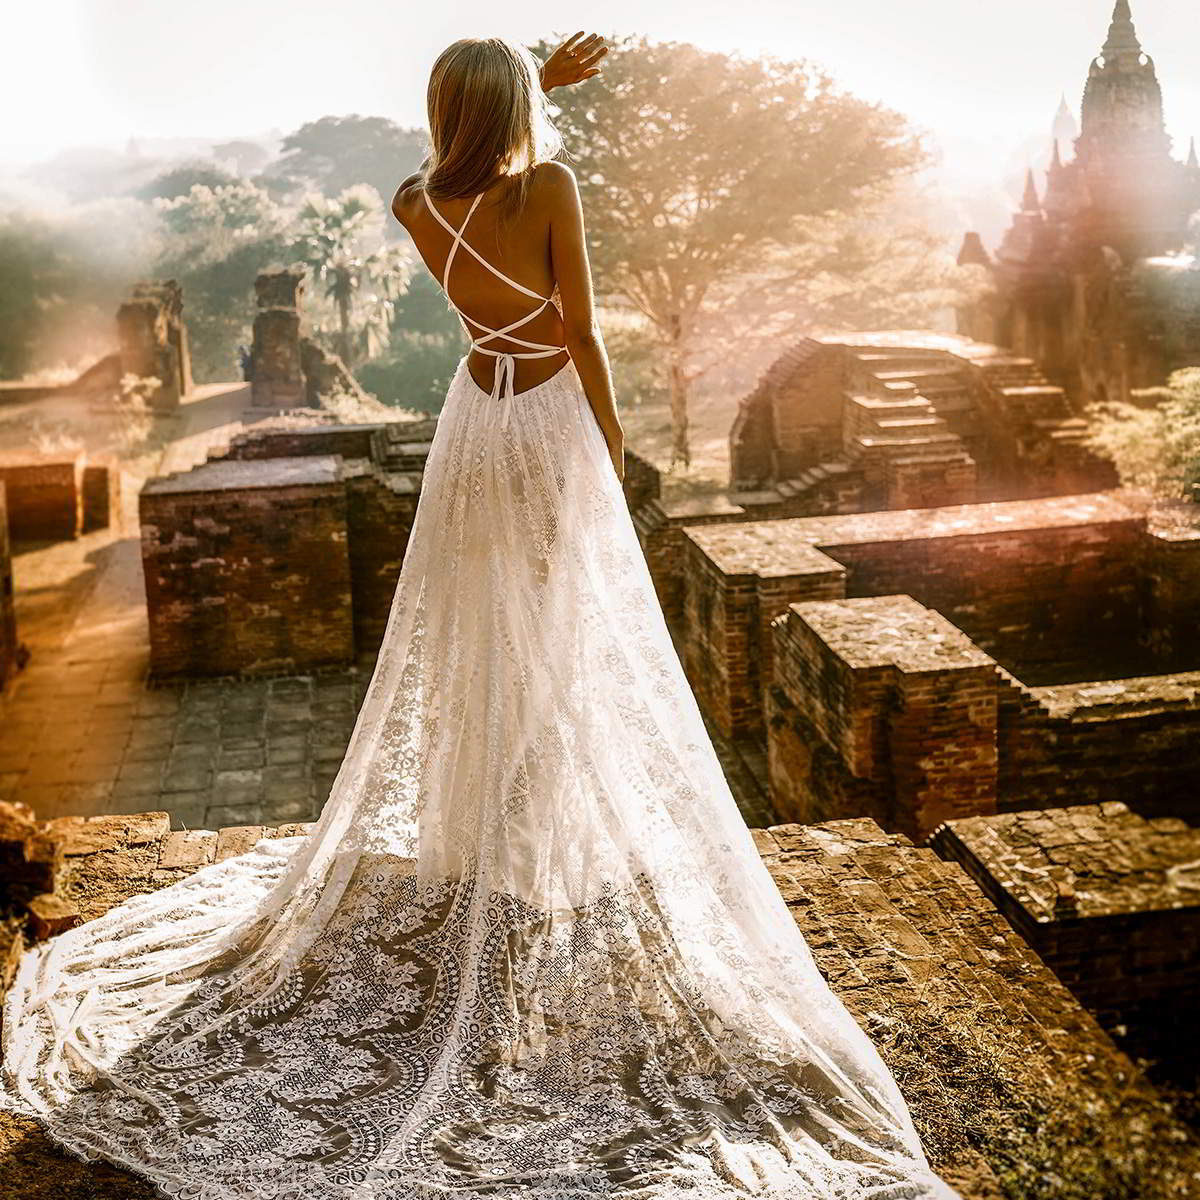 flora and lane 2019 bridal collection featured on wedding inspirasi thumbnail